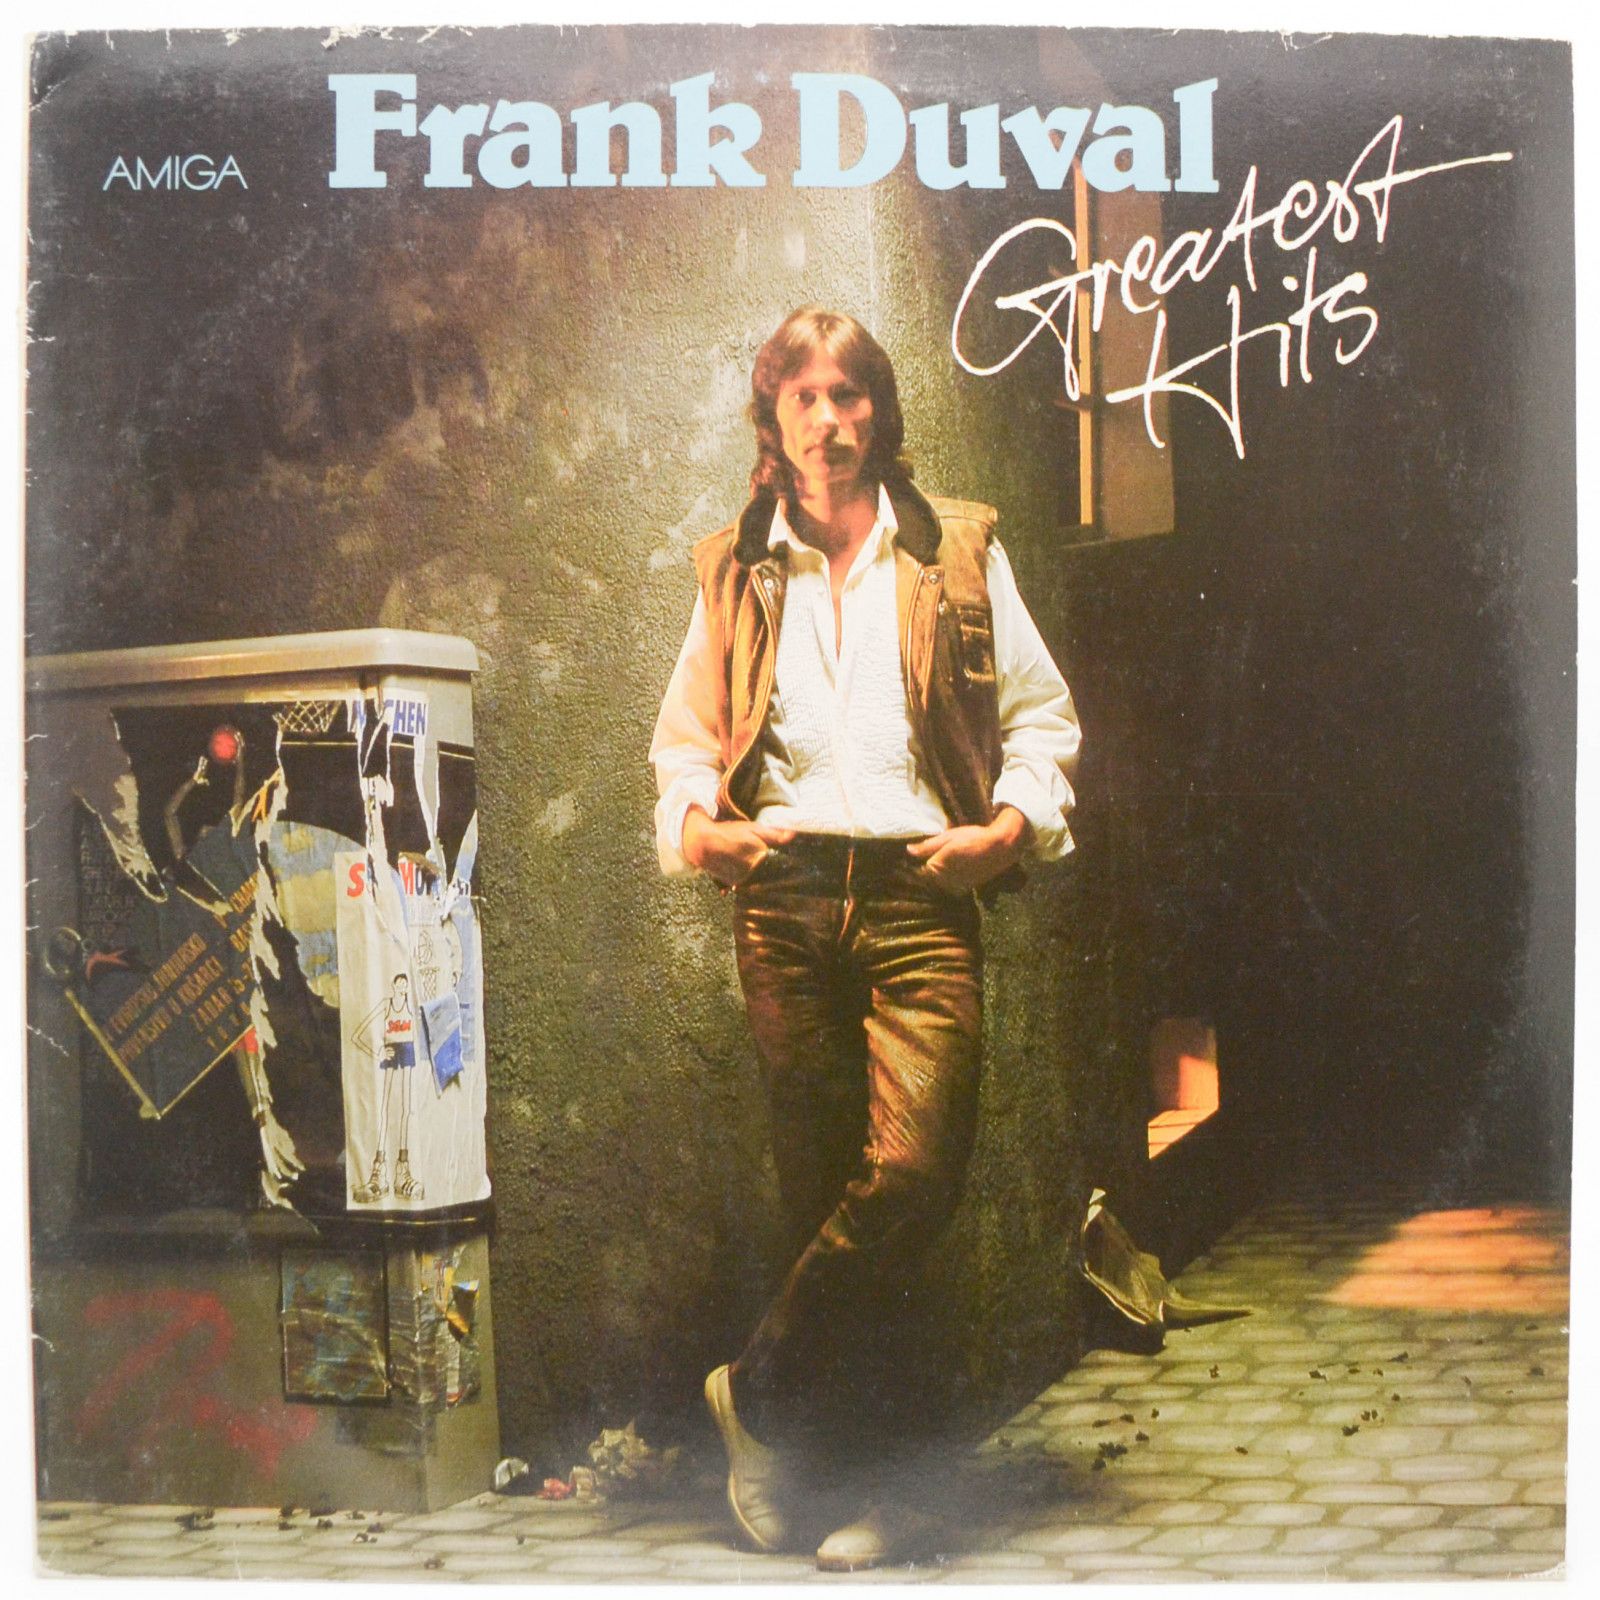 Frank Duval — Greatest Hits, 1988